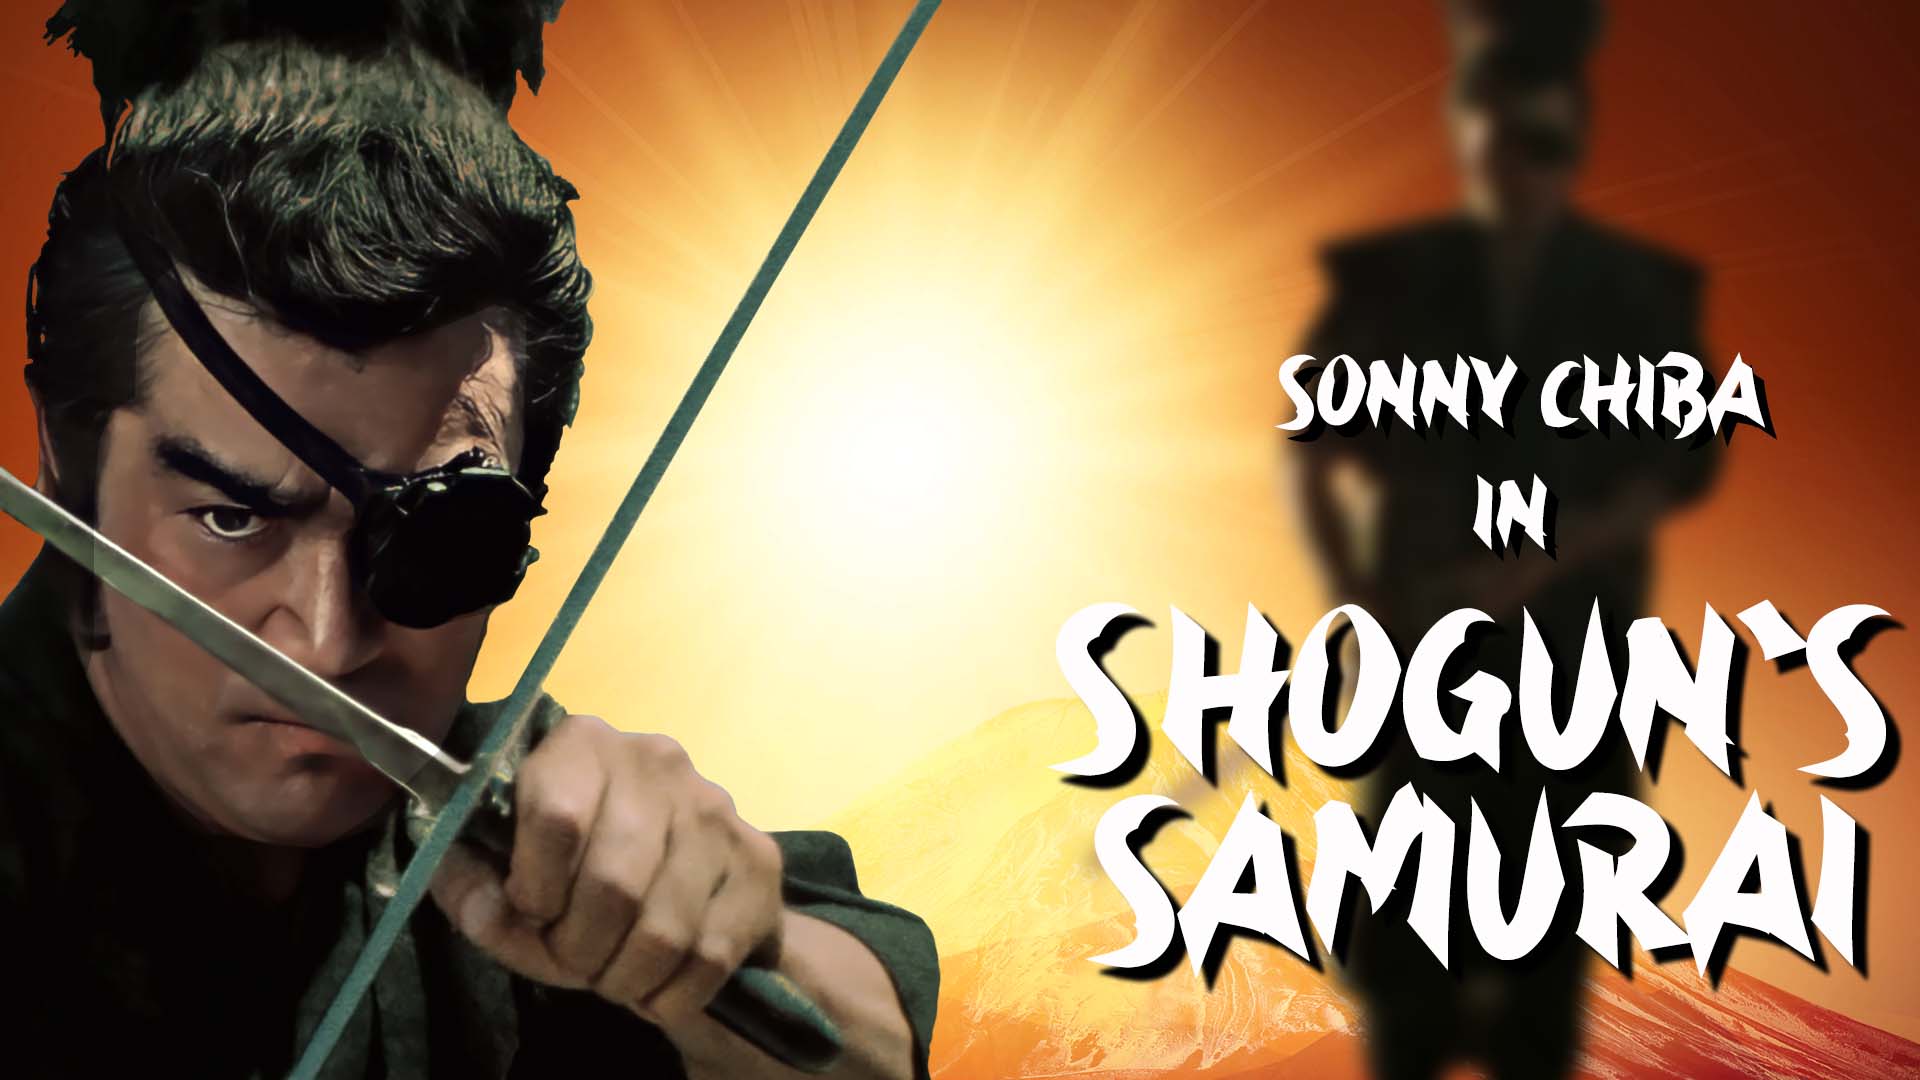 shoguns samurai poster